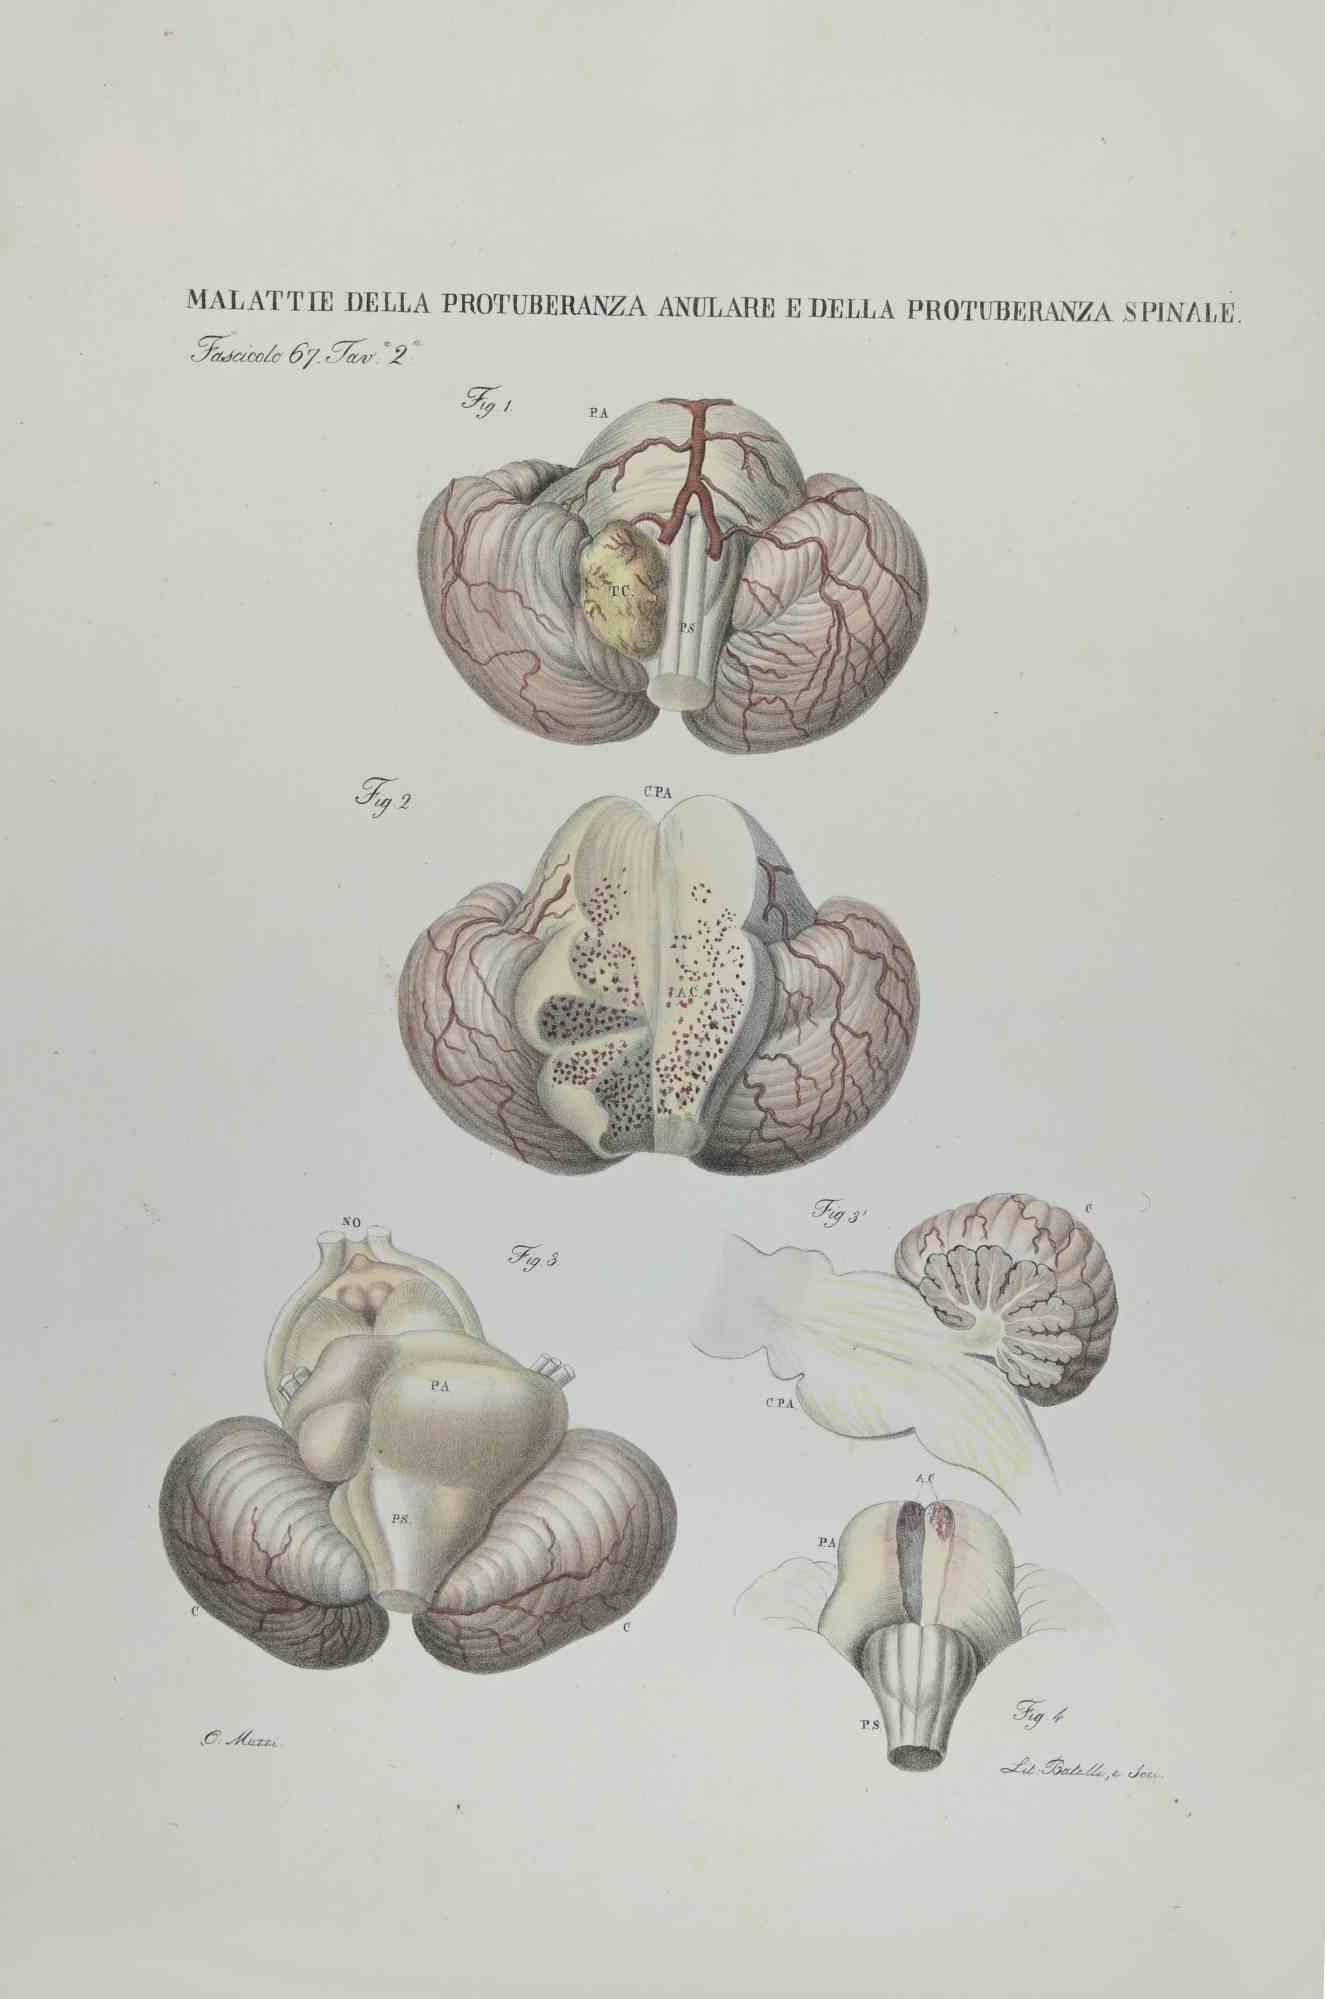 Ottavio Muzzi Figurative Print - Diseases of the Annular Protuberance and Spinal Protuberance-Lithograph-1843